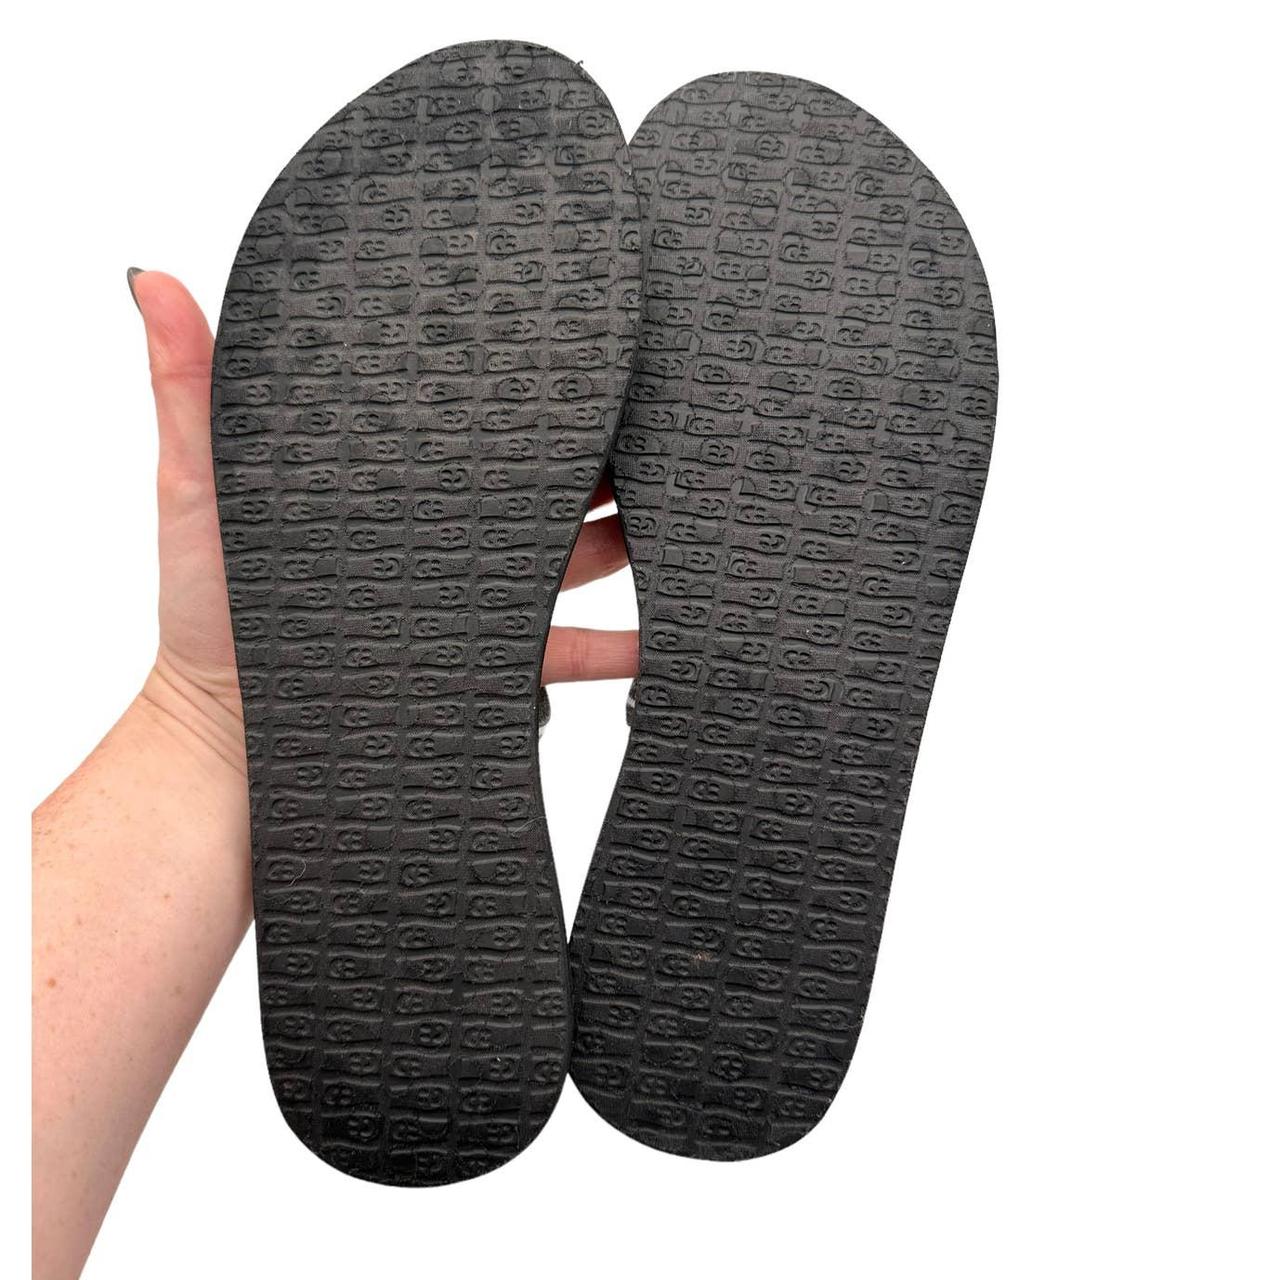 Sanuk Yoga Sandals Black & White Striped Fabric size - Depop